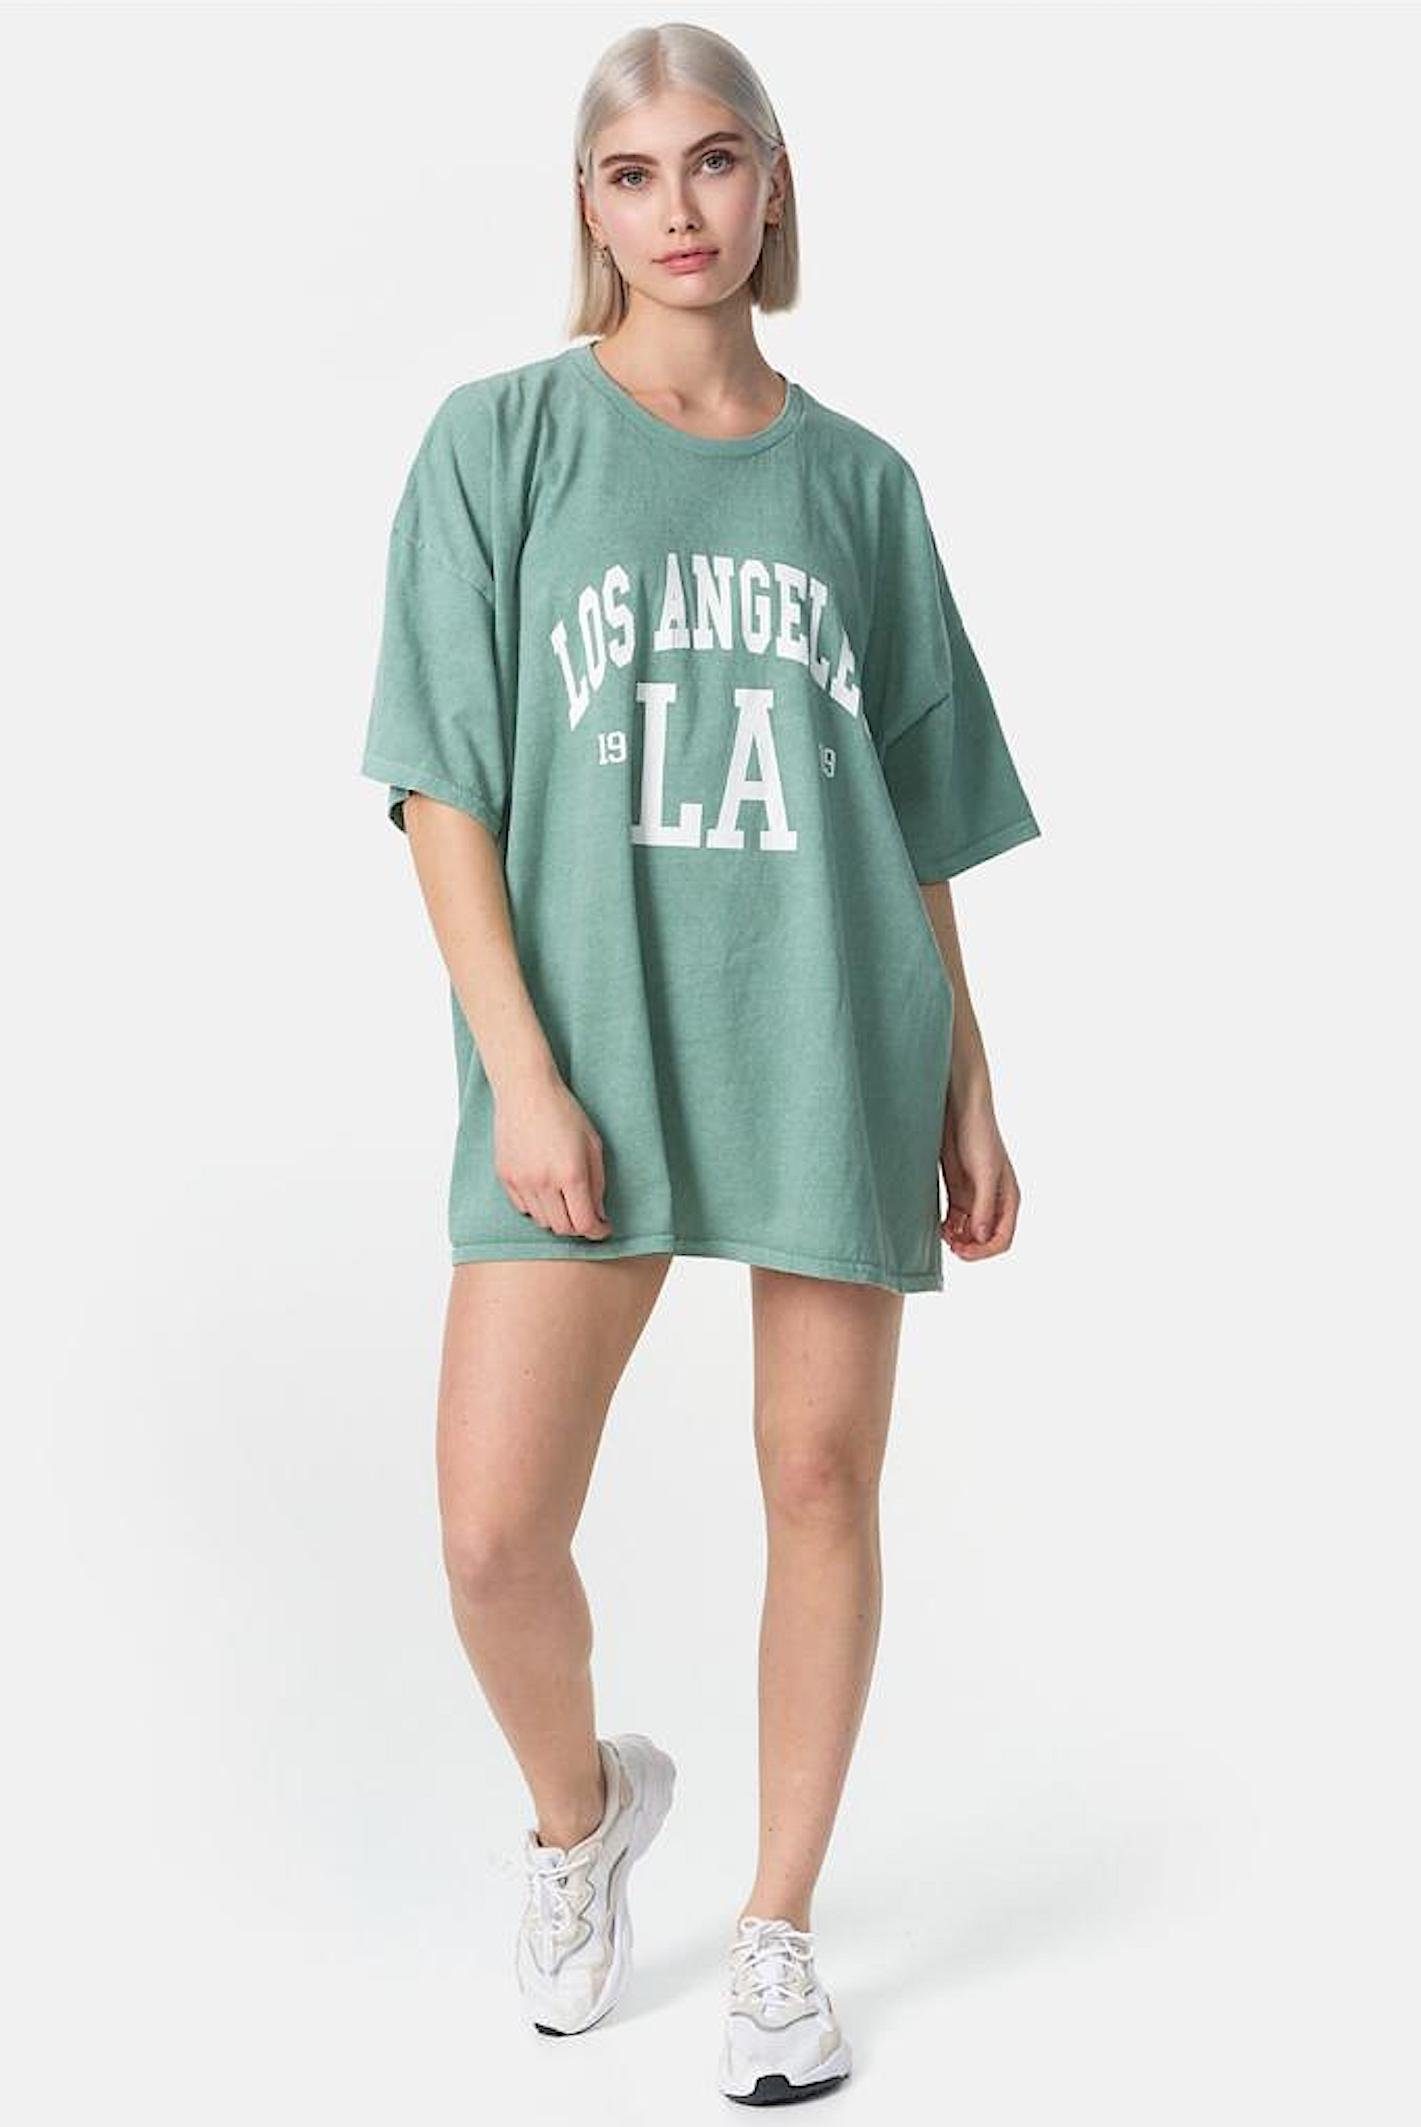 LOS ANGELES Worldclassca LA Mint Sommer T-Shirt Print lang Tee T-Shirt Worldclassca Oversized